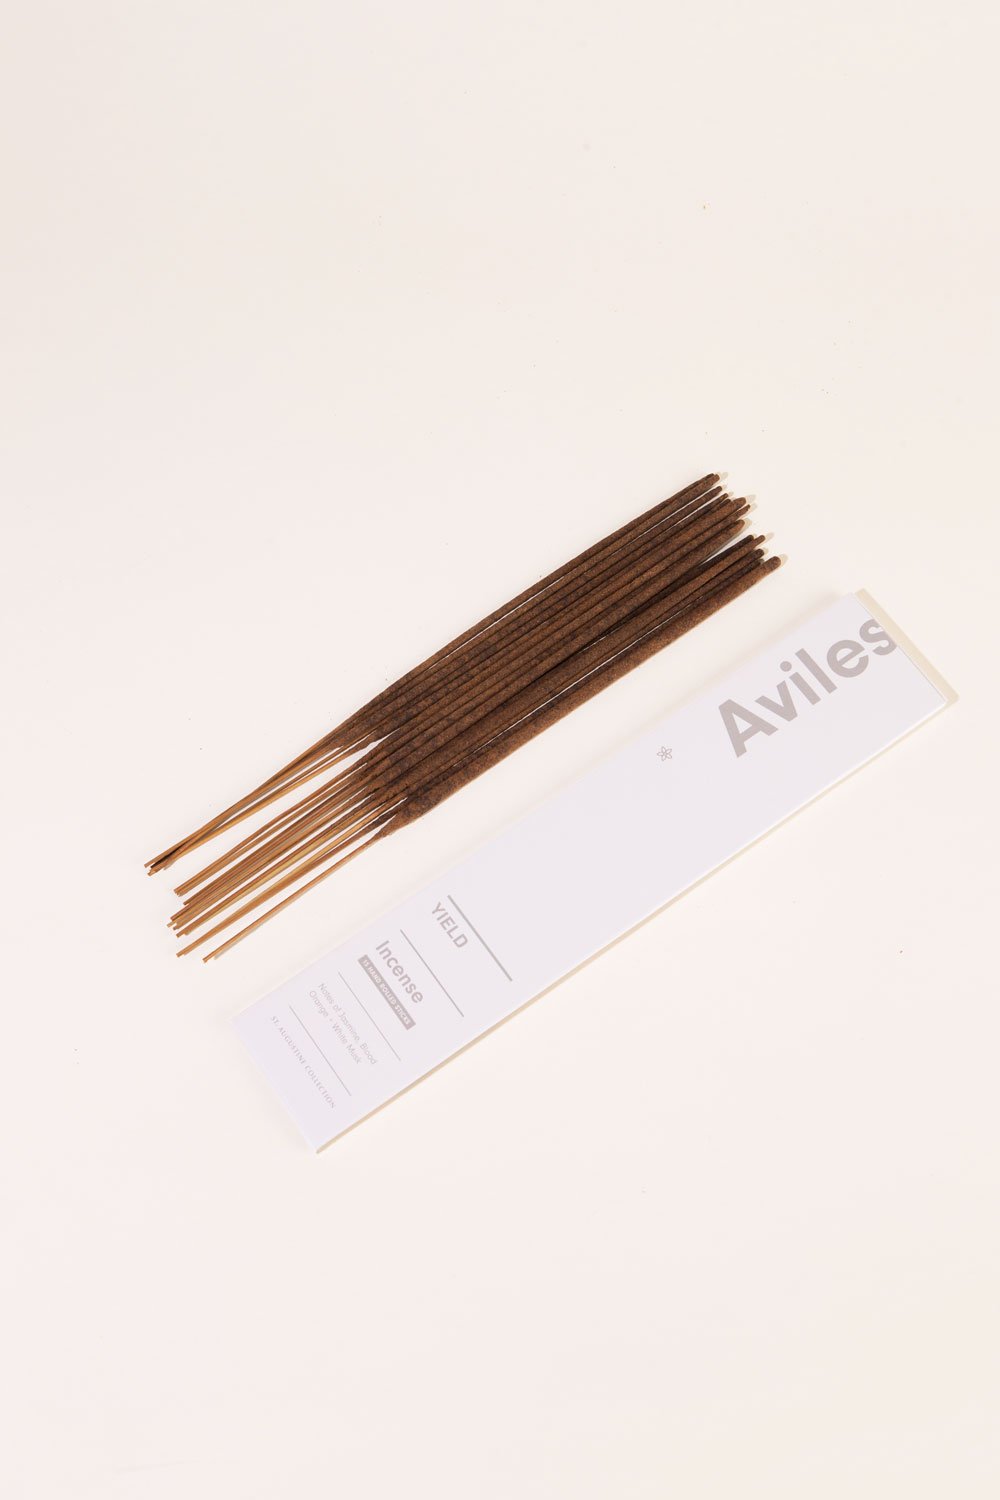 Aviles Incense Sticks - Indie Indie Bang! Bang!